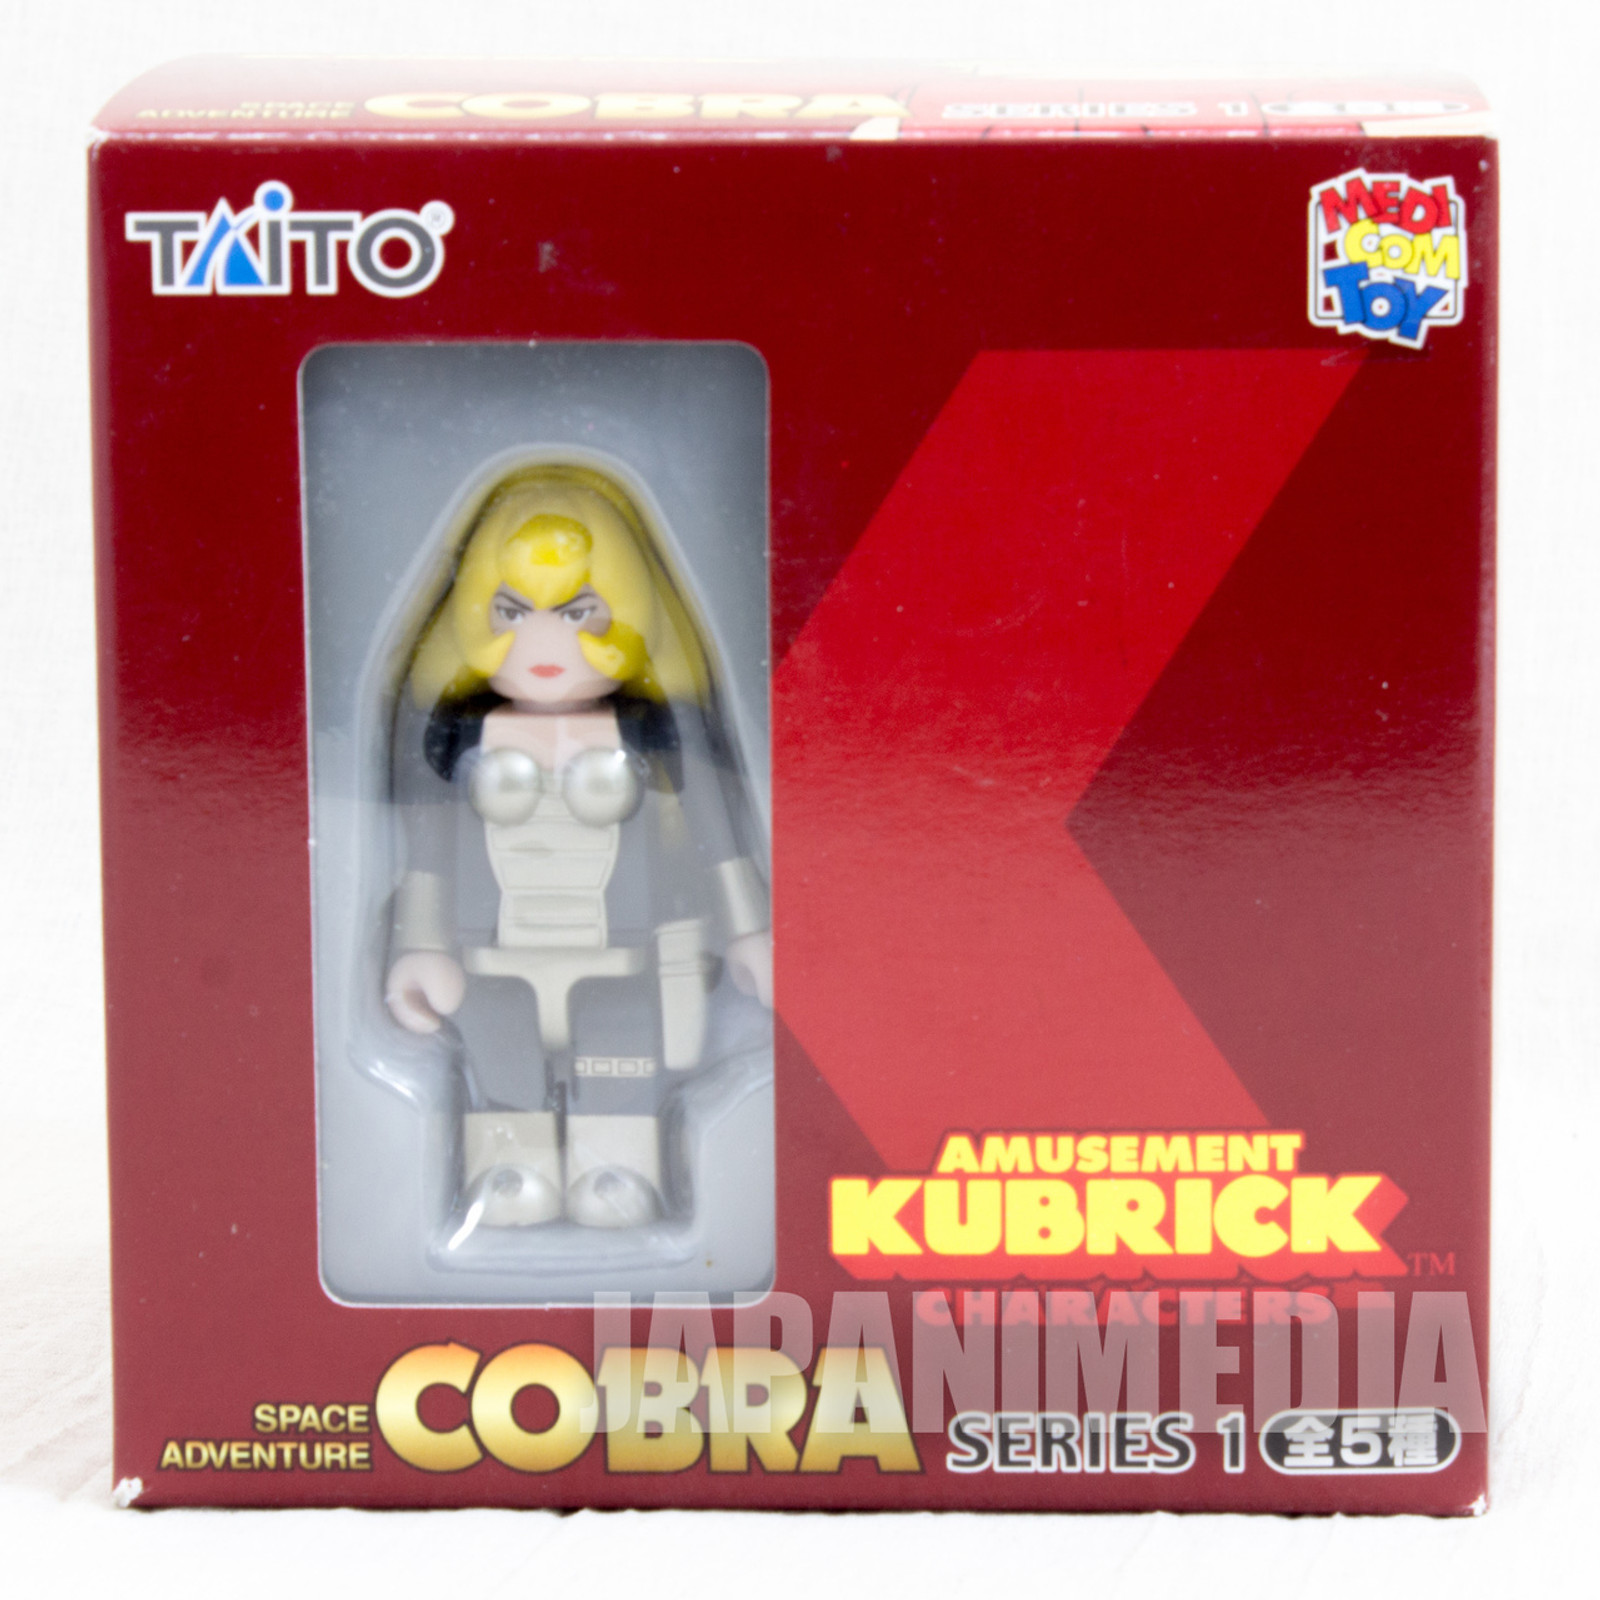 RARE Space Adventure Cobra Jane Royal Kubrick Figure Medicom Toy Japan